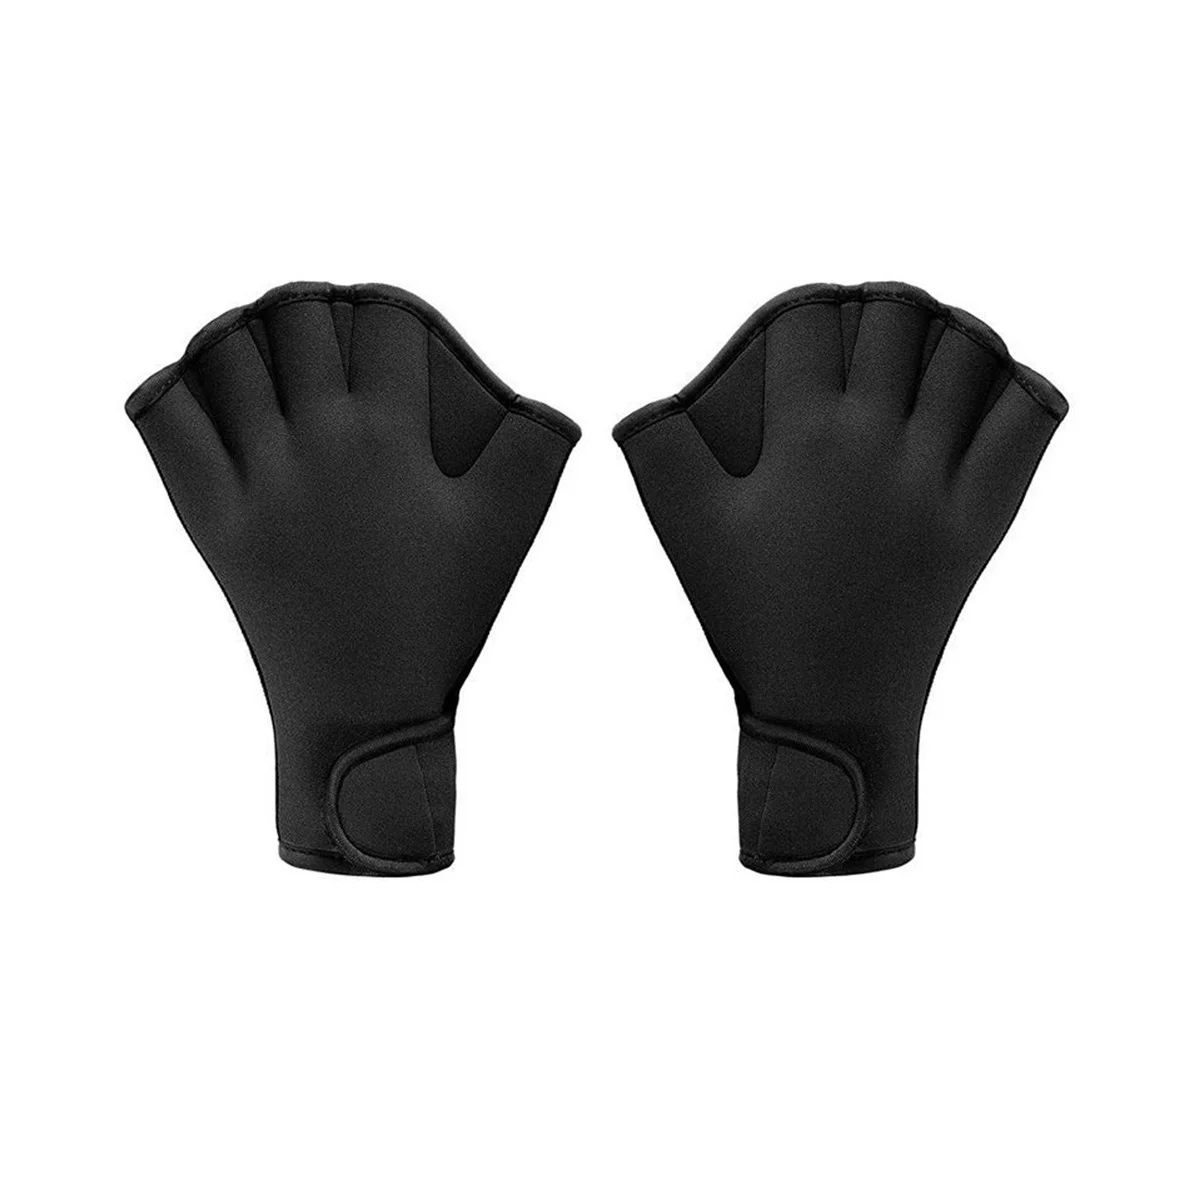 

Swimming Training, Diving Equipment, Anti-Slip Semi-Fingered Gloves for Adults and Children Swimming Training,Black+L